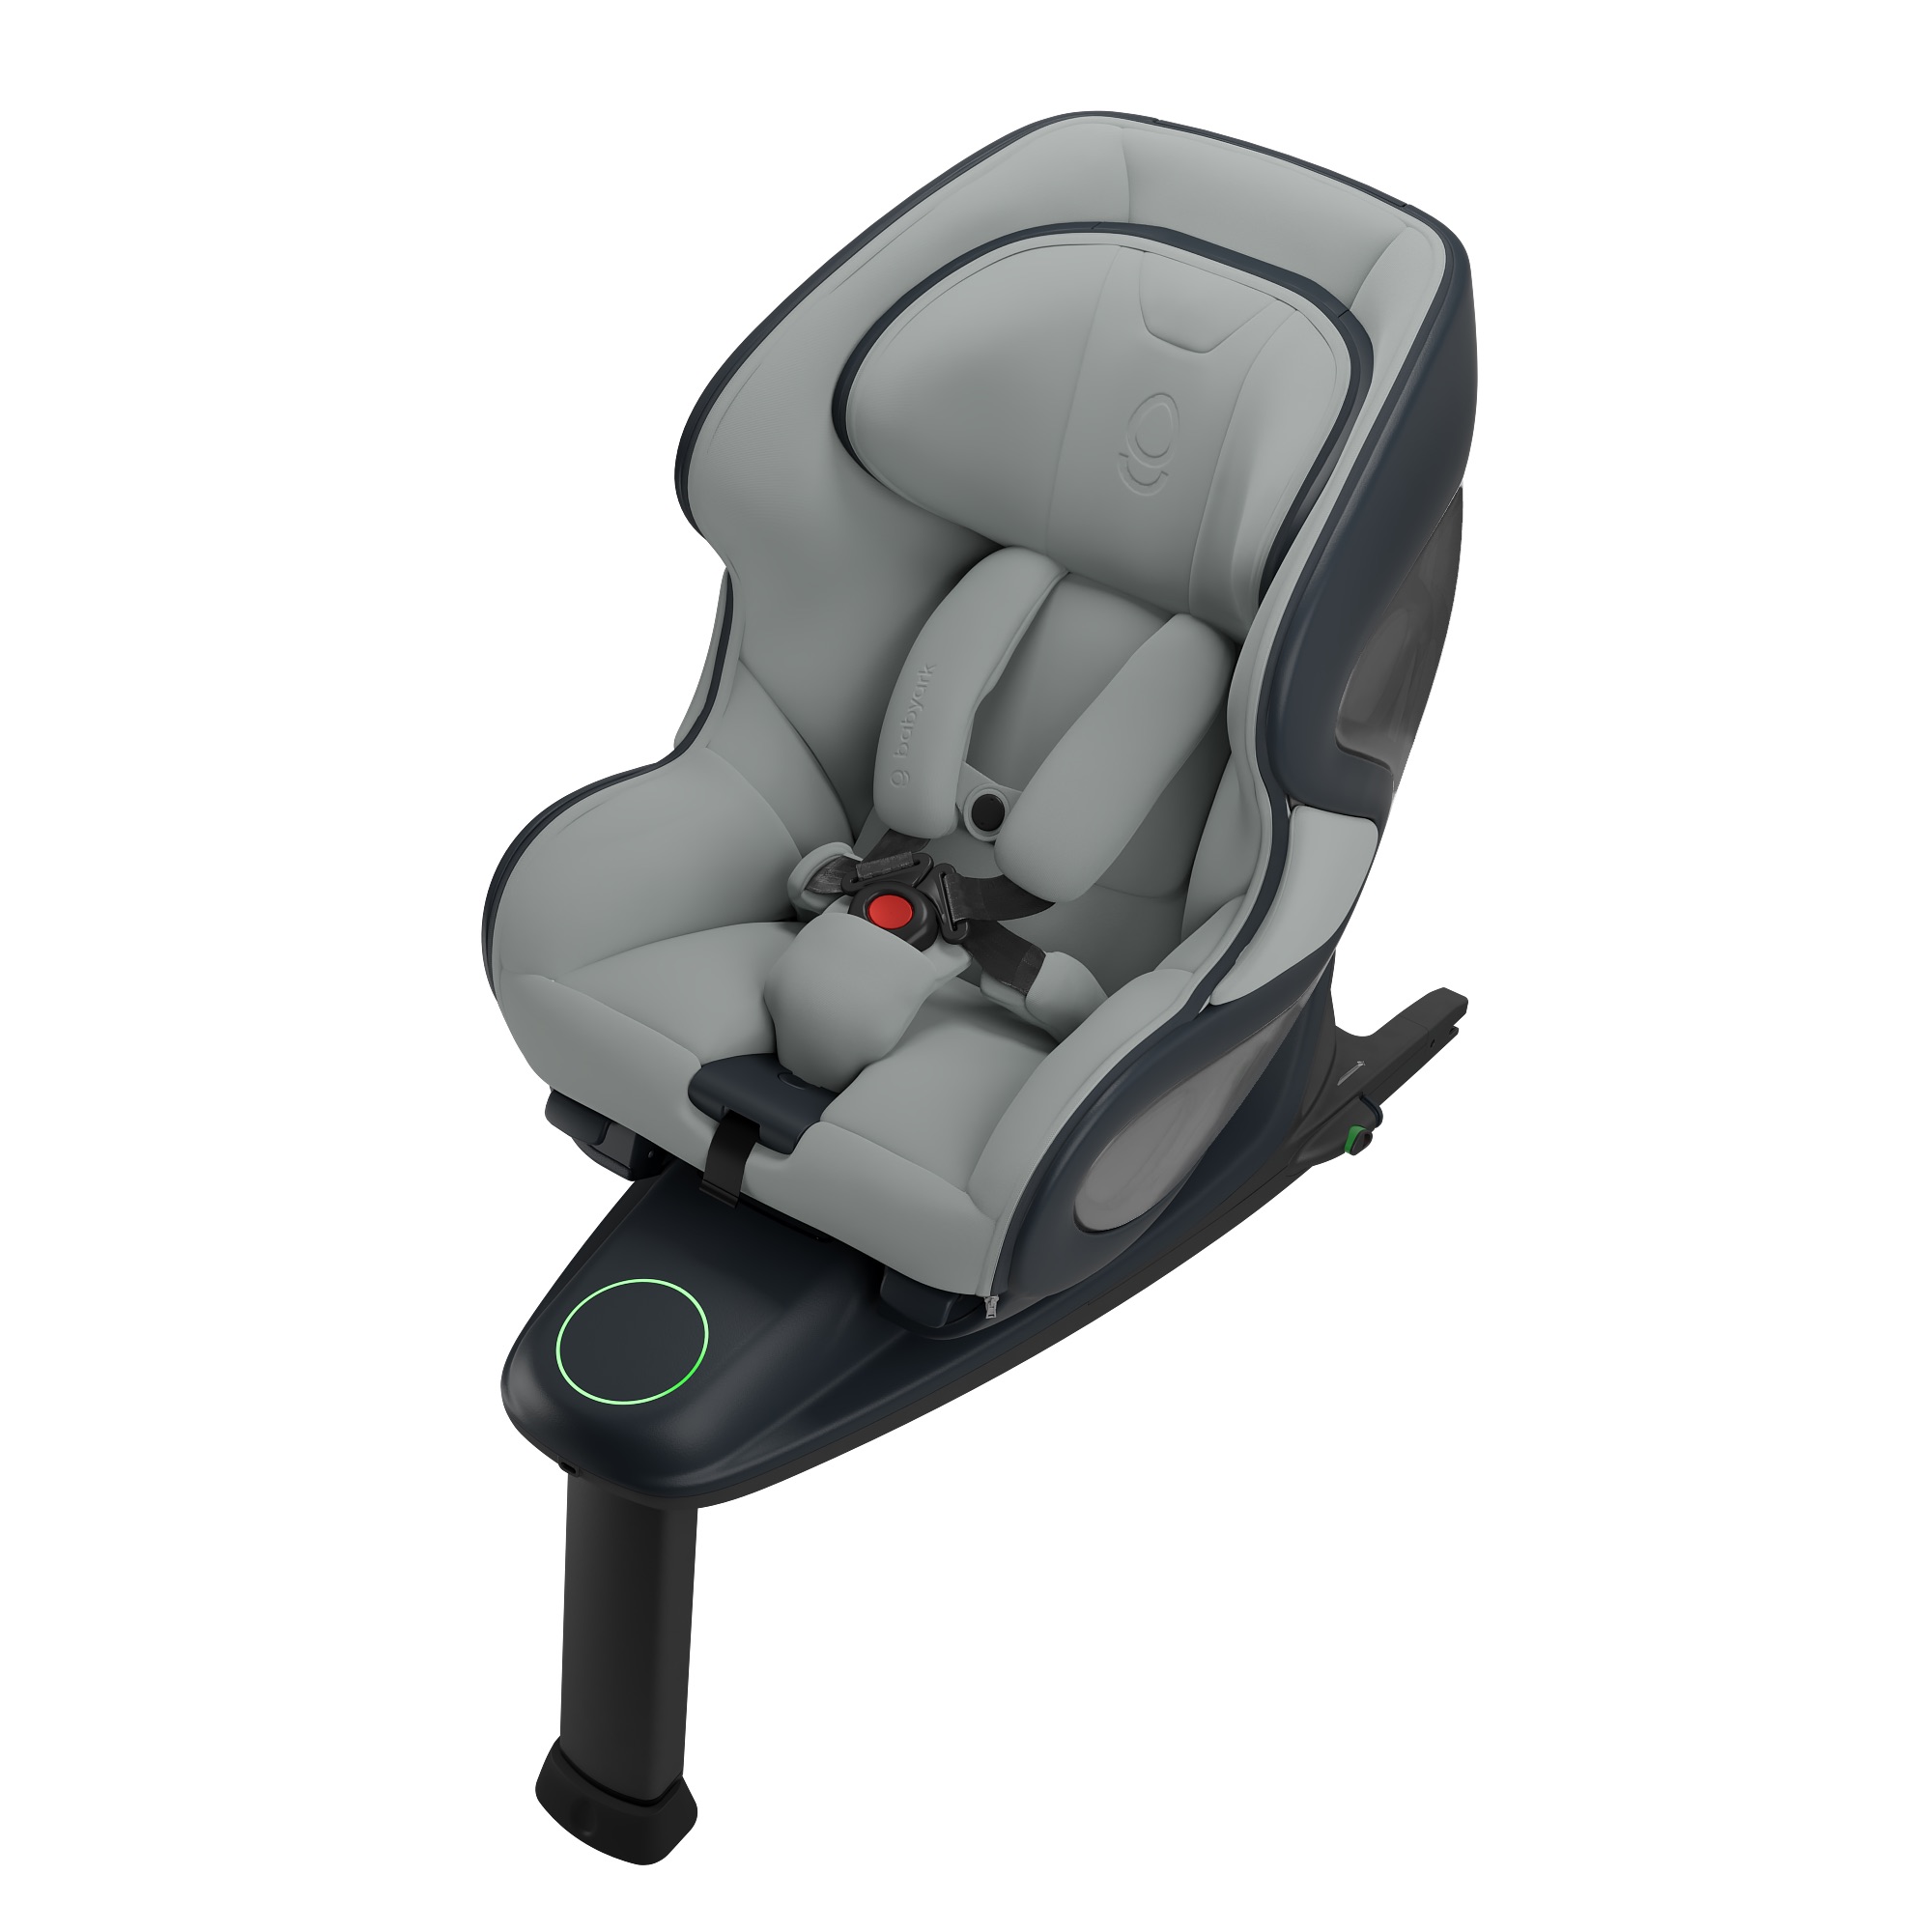 Babyark Convertible Car Seat Charcoal Grey/Dark - Glacier Ice